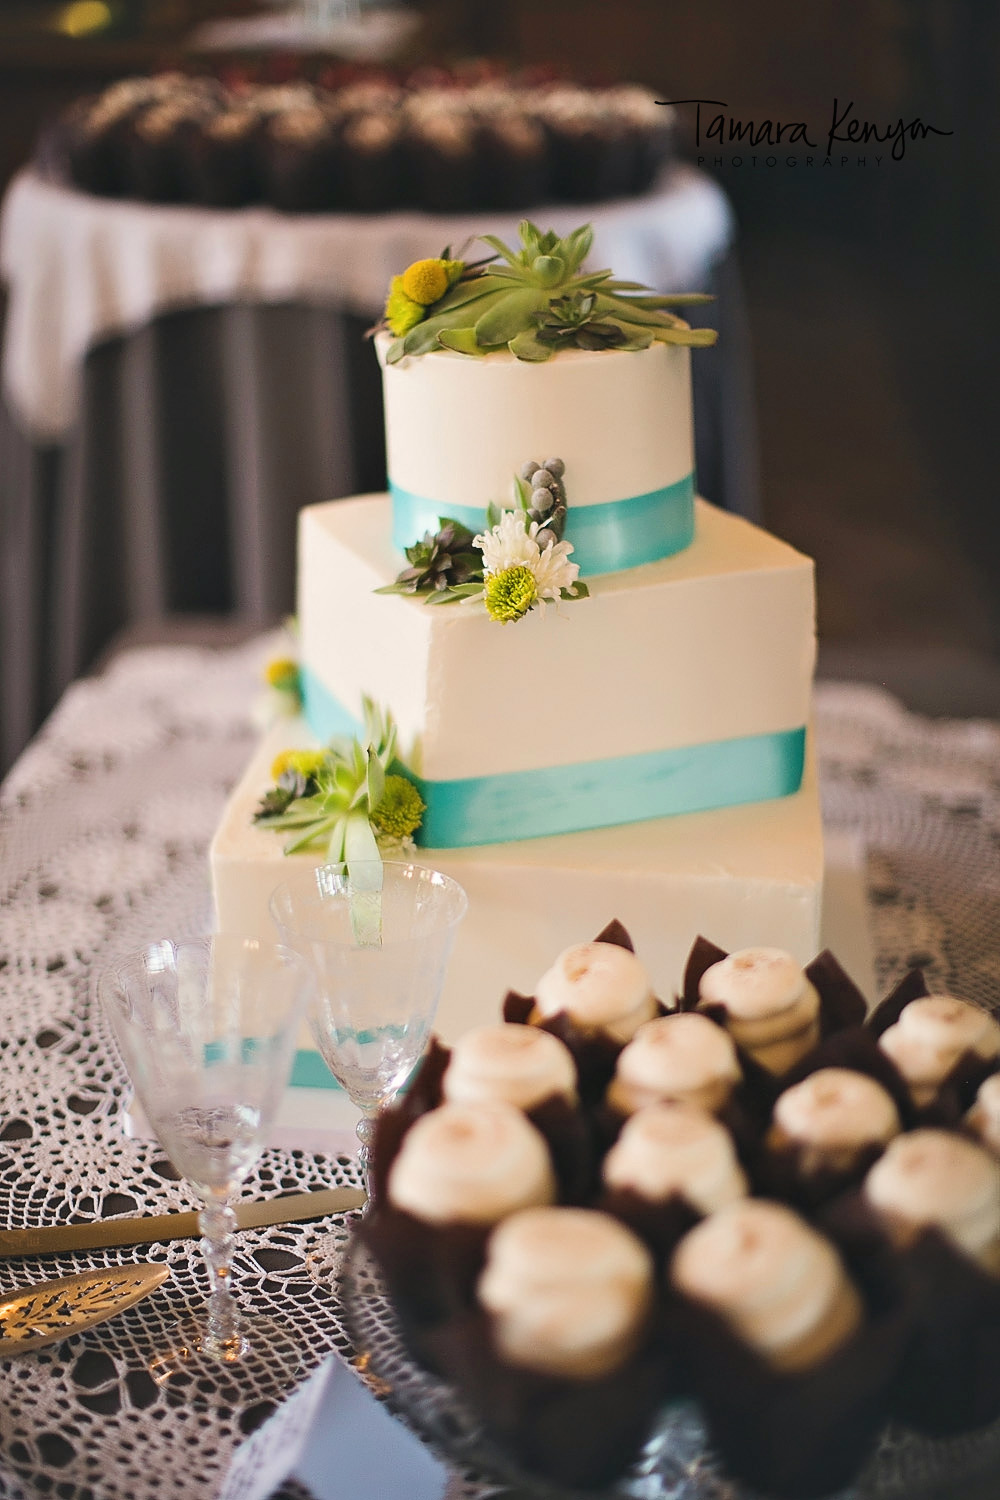 amaru confections wedding cake